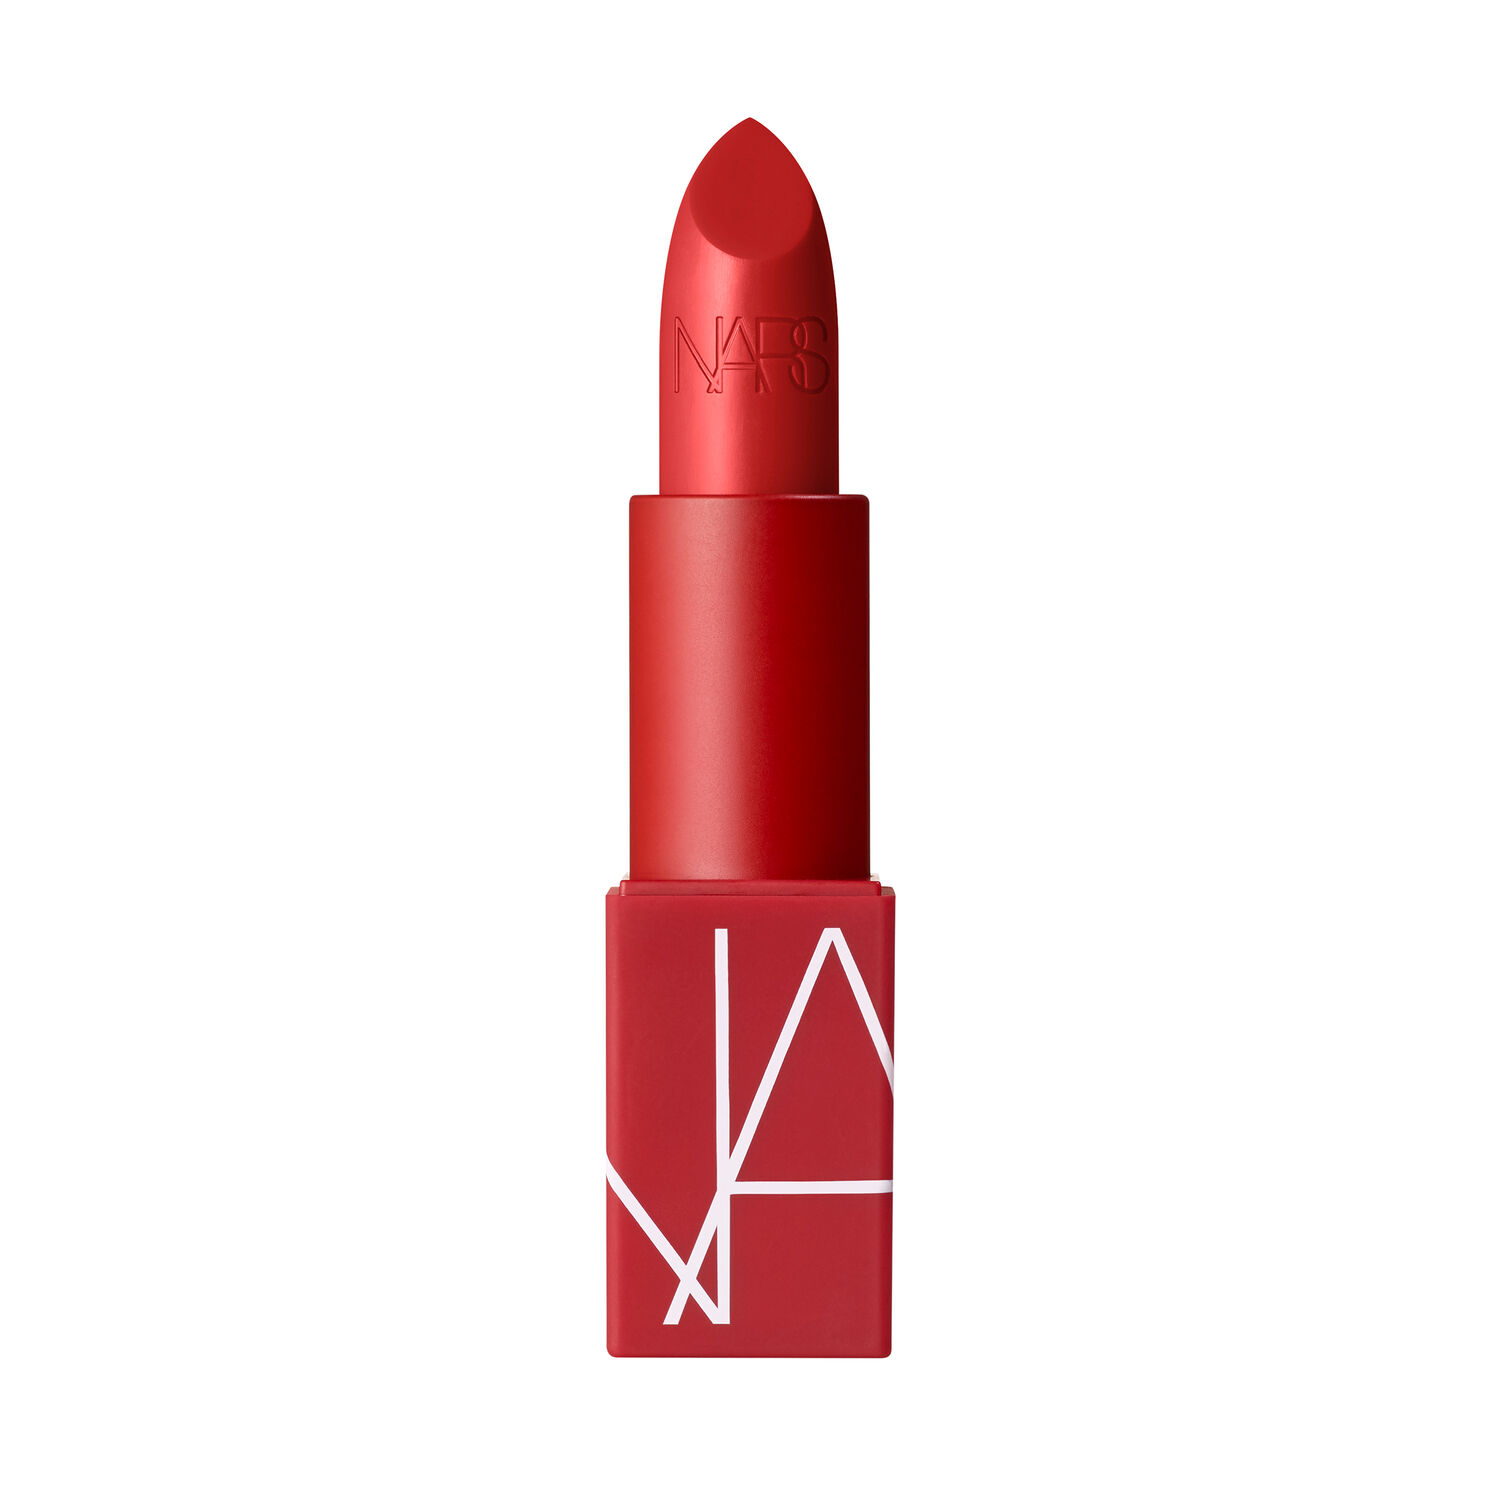 NARS Lipstick in Jungle Red